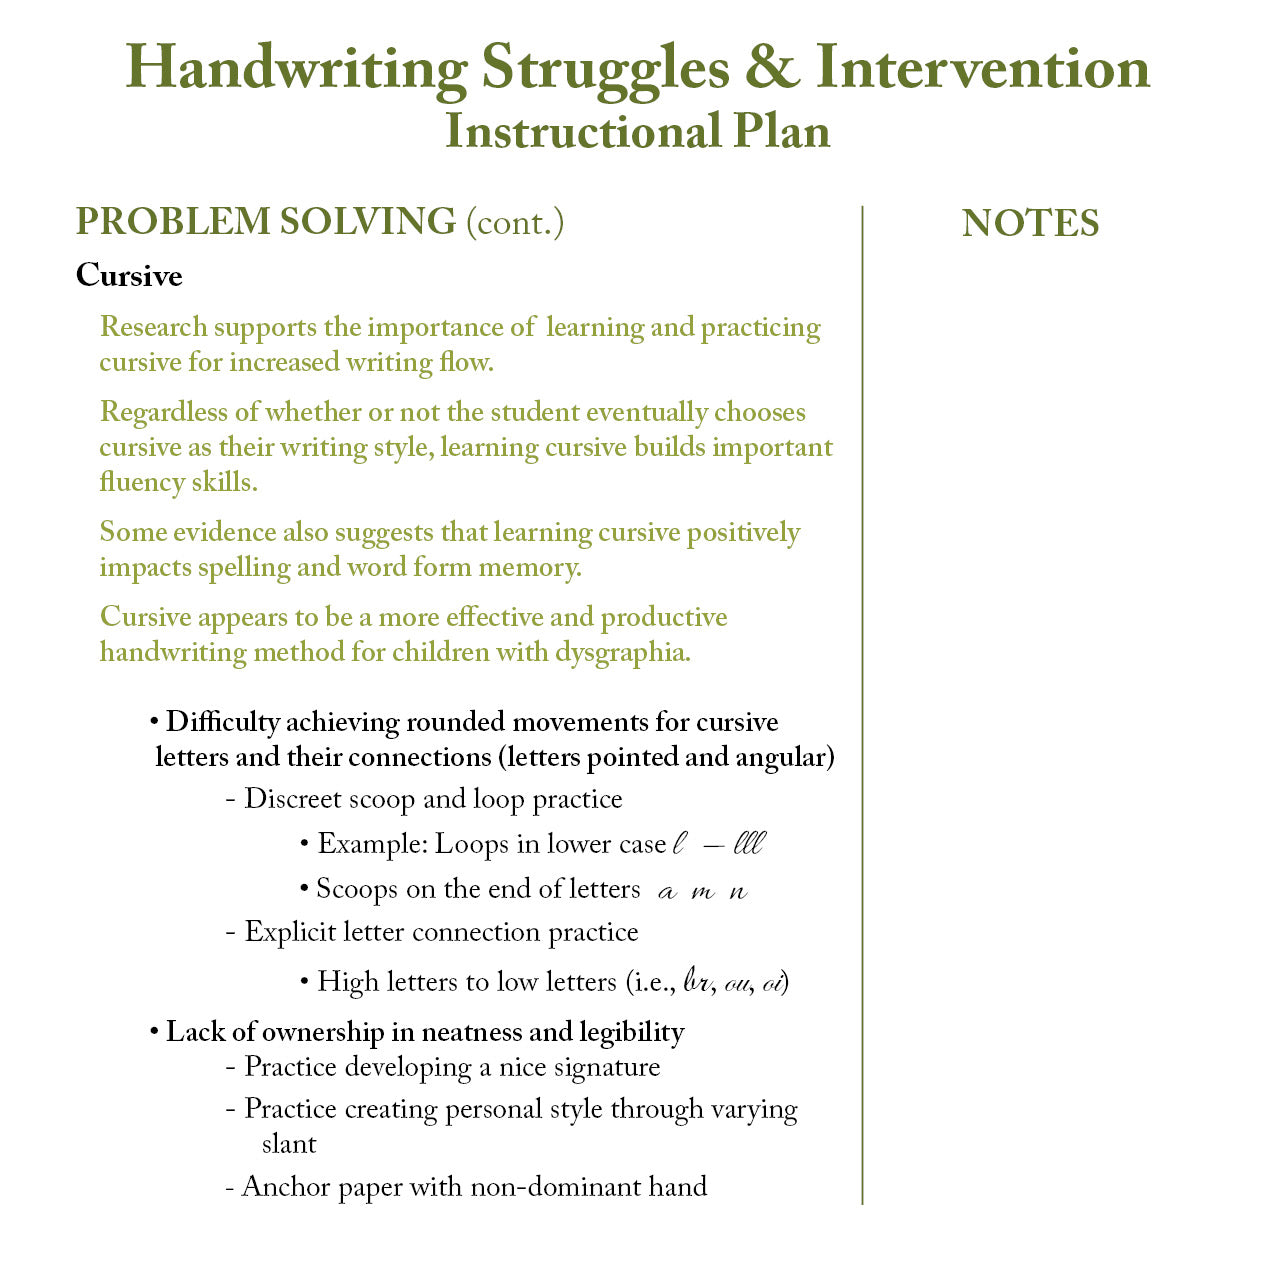 Handwriting Struggle & Intervention Educator Class